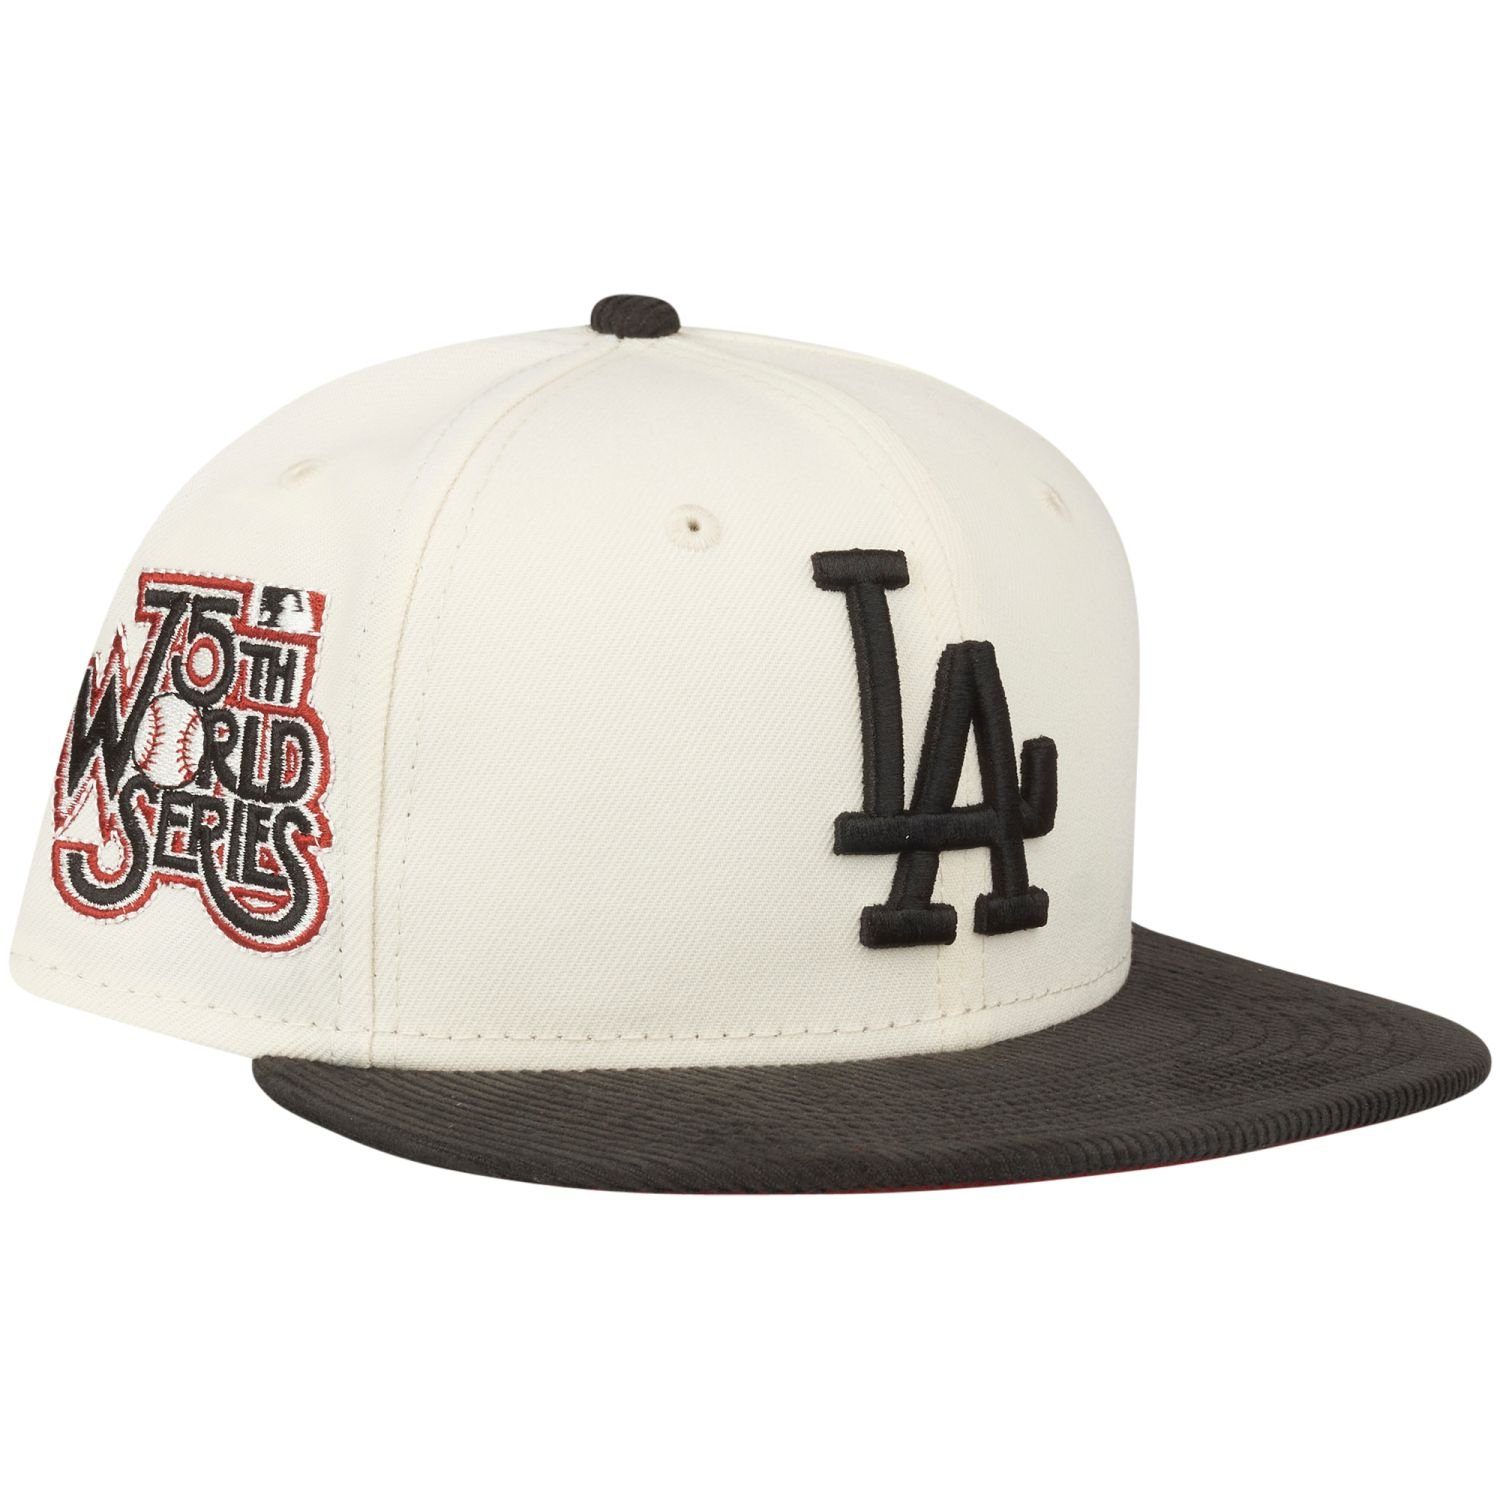 New Era Fitted Cap 59Fifty WORLD SERIES Los Angeles Dodgers, MLB Los  Angeles Dodgers Fitted, Mütze, Kappe, Herren, gerade